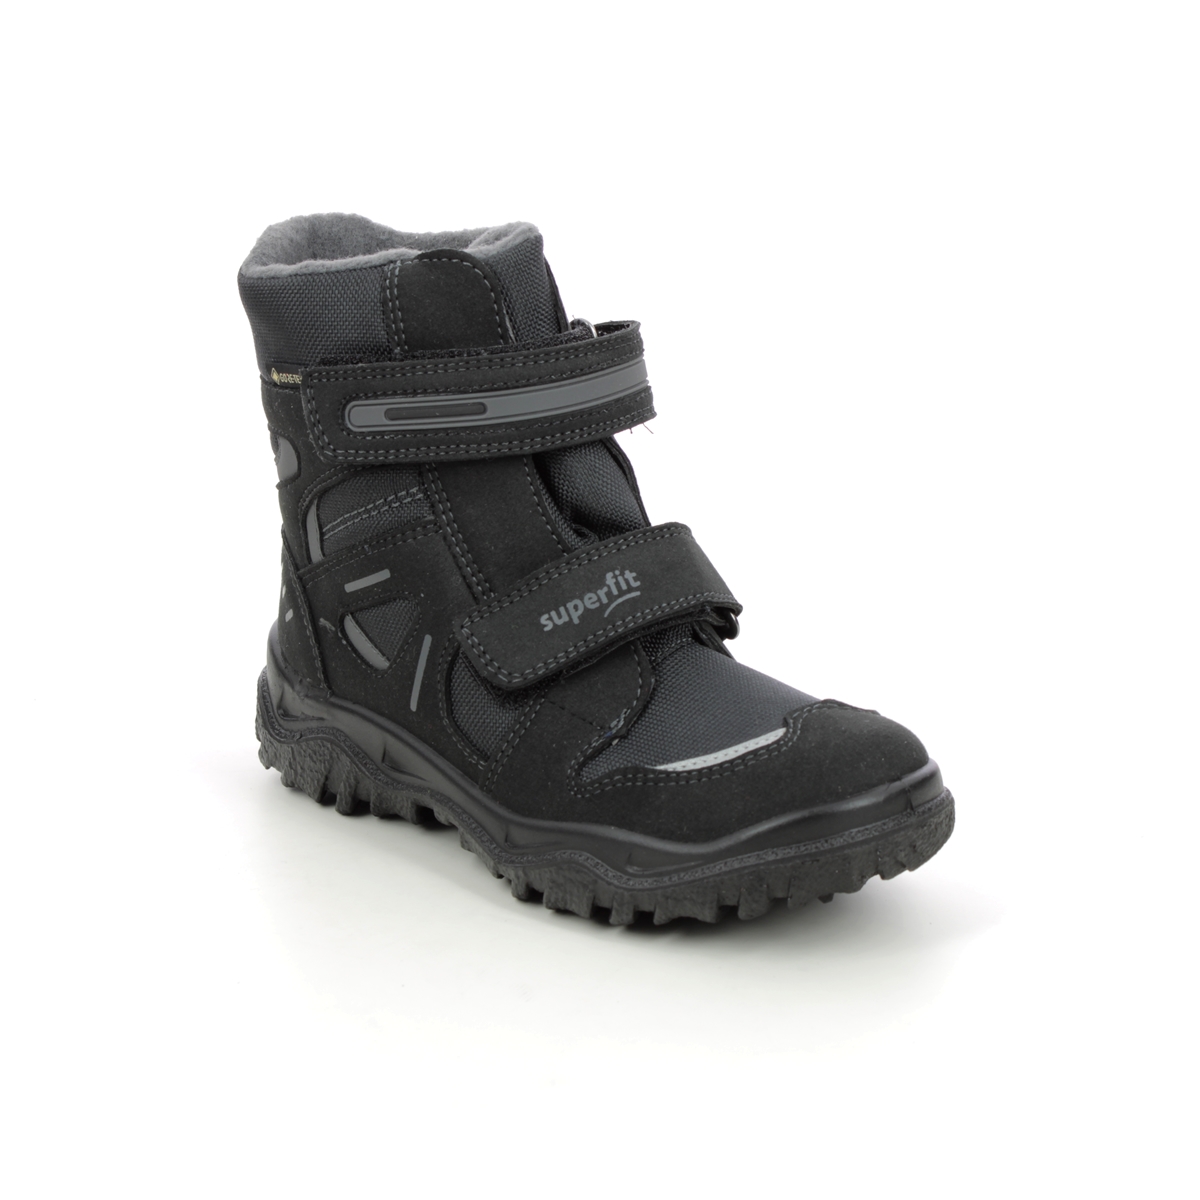 Superfit Husky Jnr Gore Black Kids Boys Boots 0809080-0600 In Size 29 In Plain Black For kids